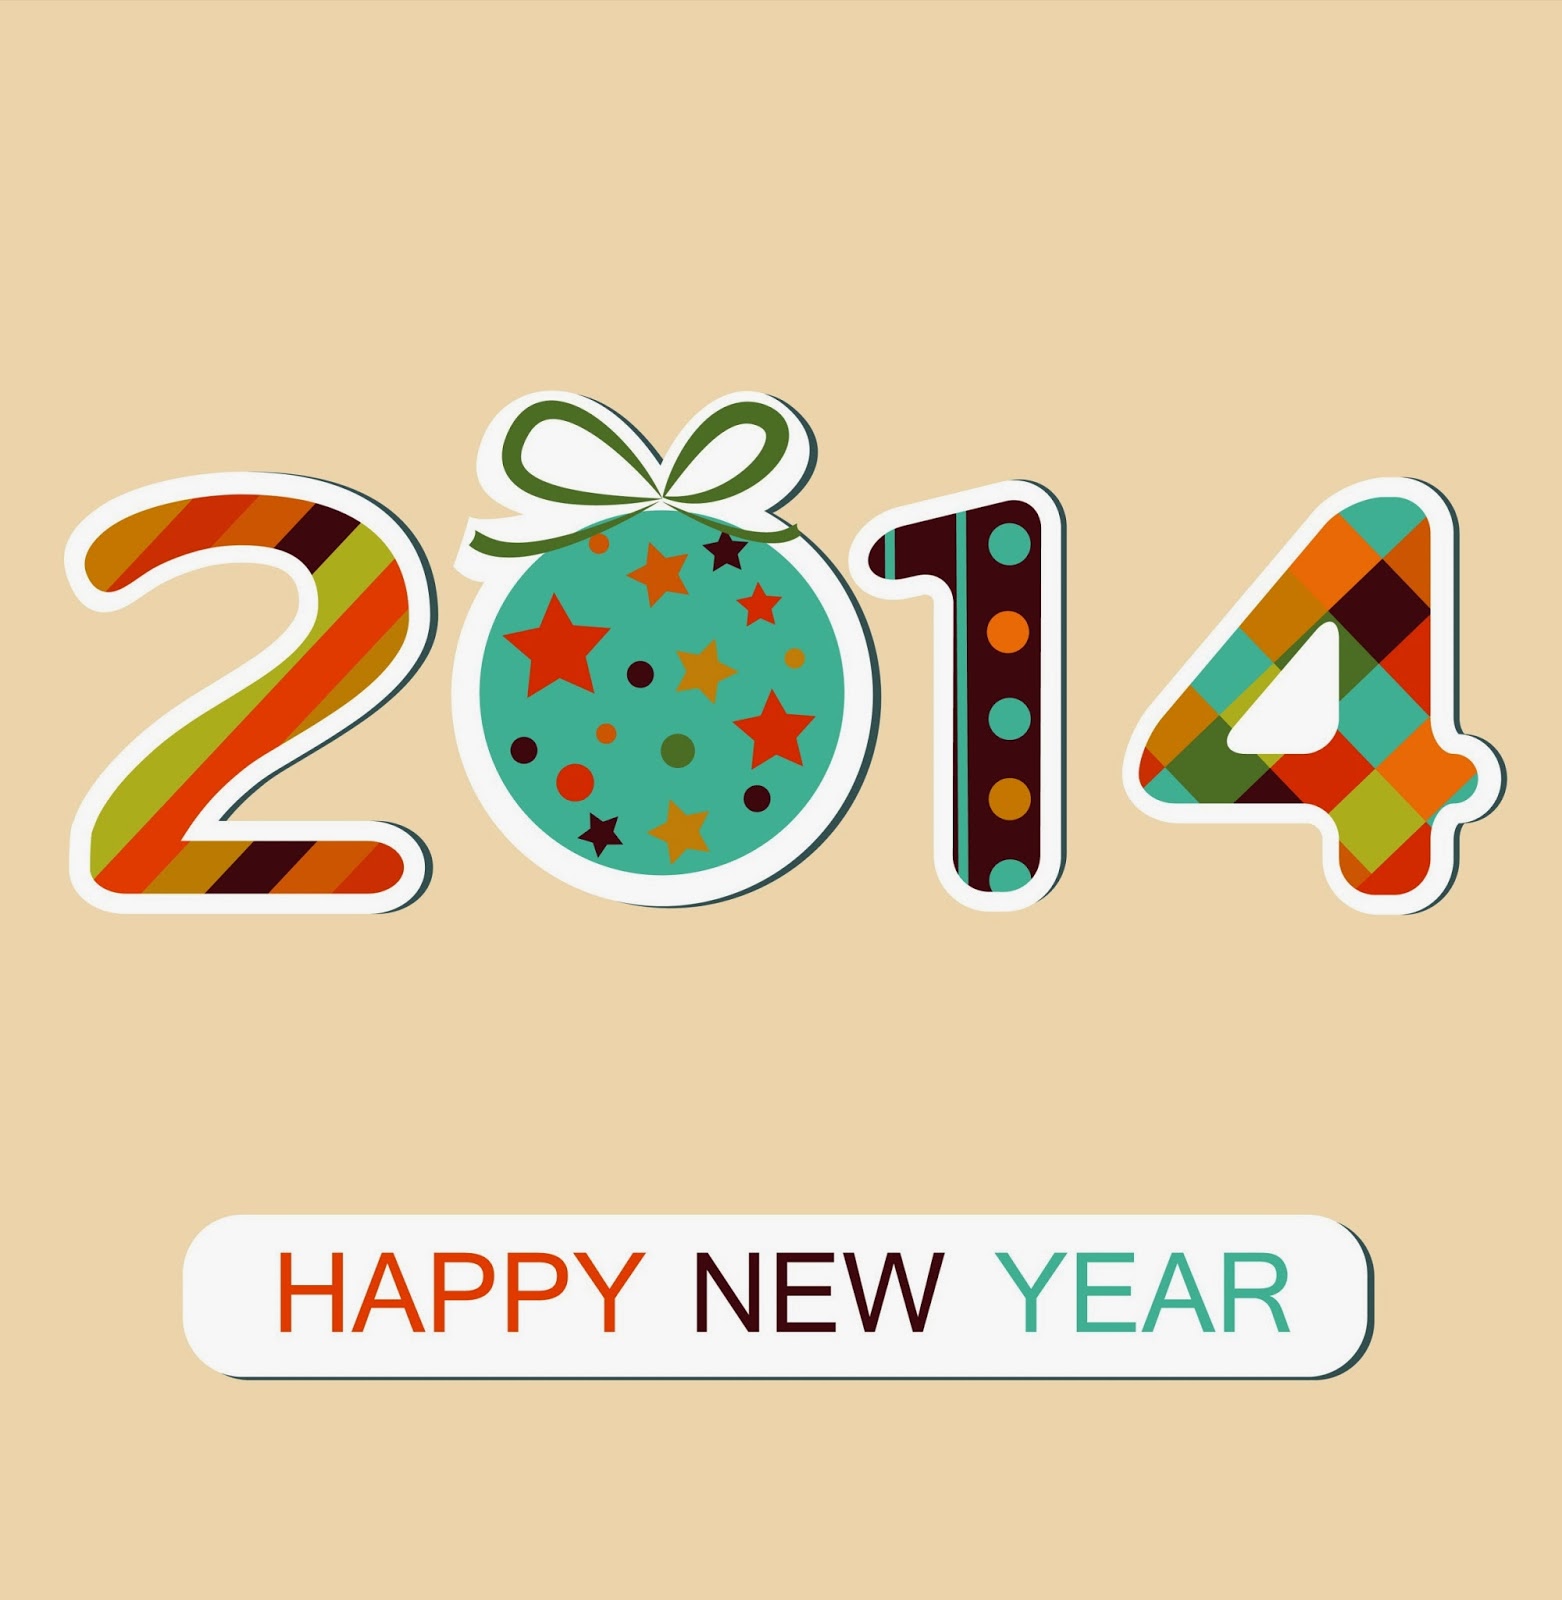 clipart happy new years 2014 - photo #14